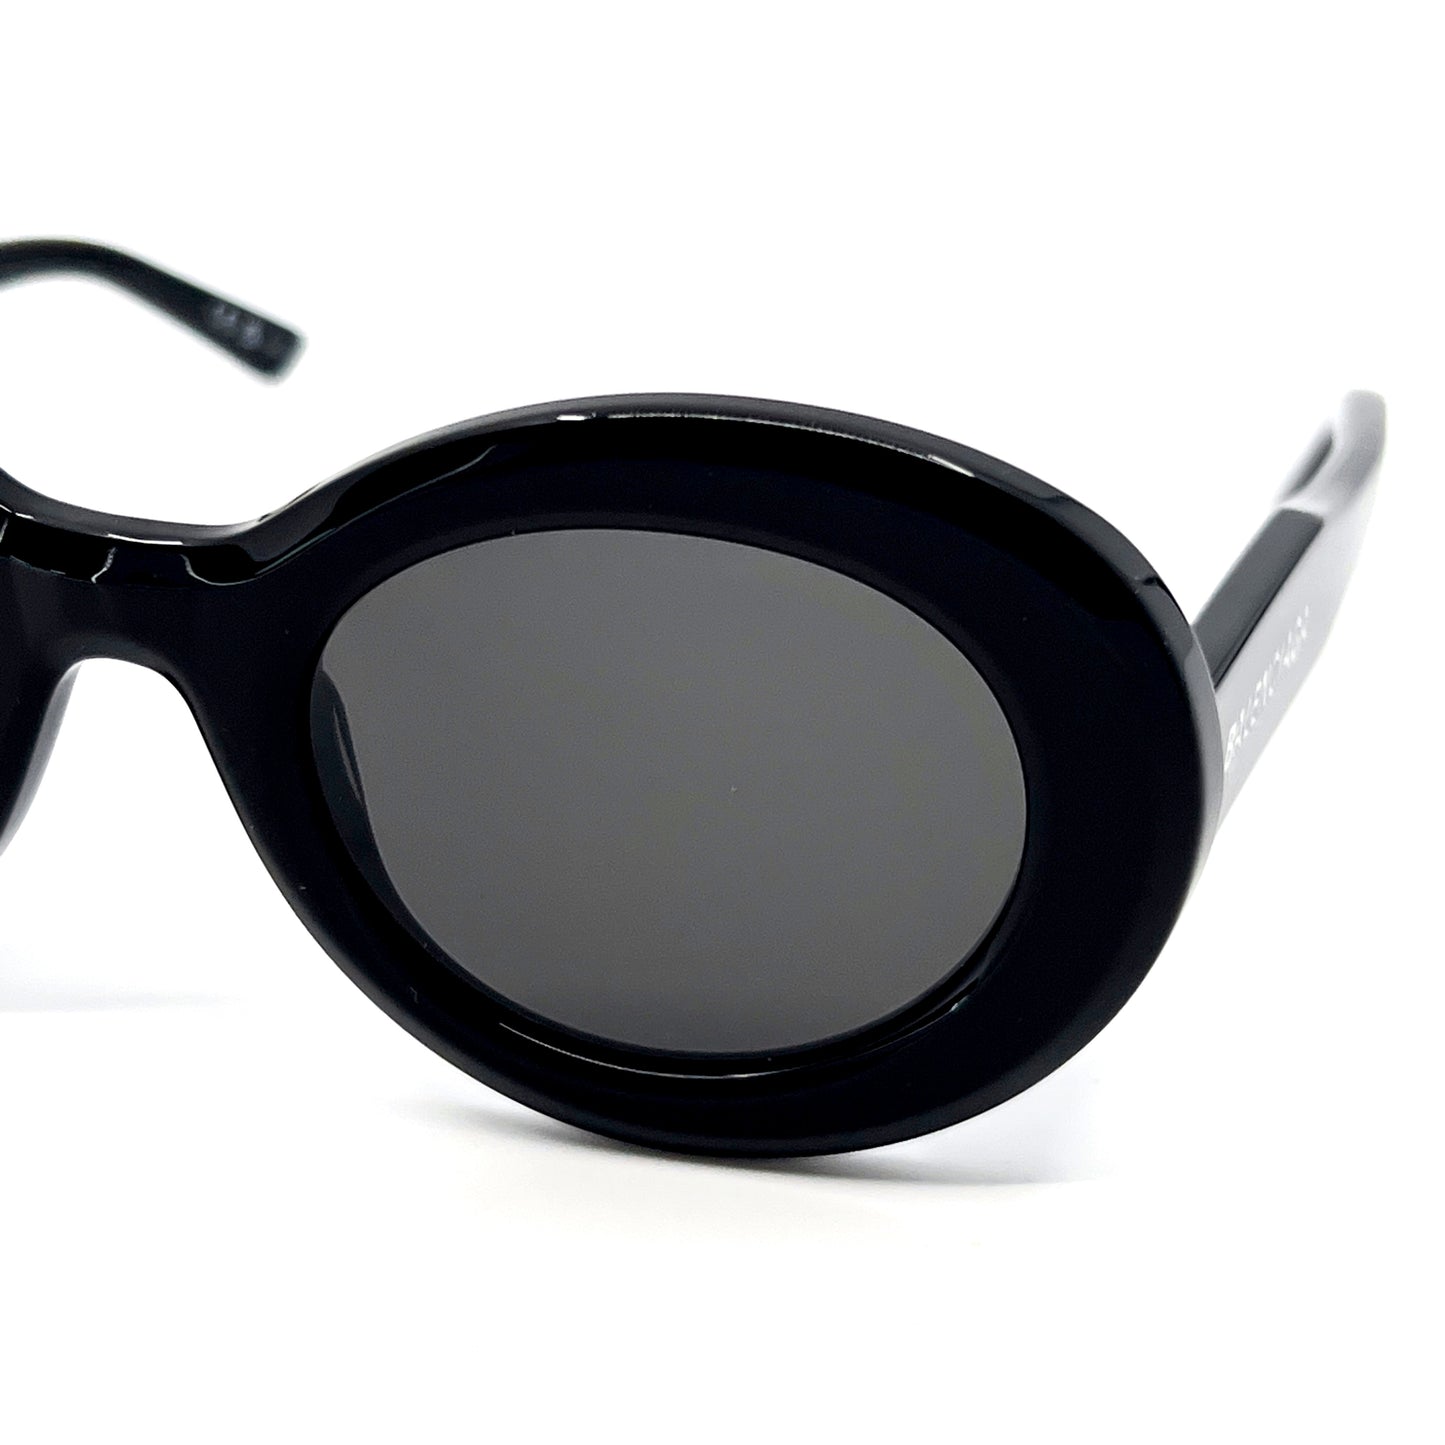 BALENCIAGA Sunglasses BB0074S 001